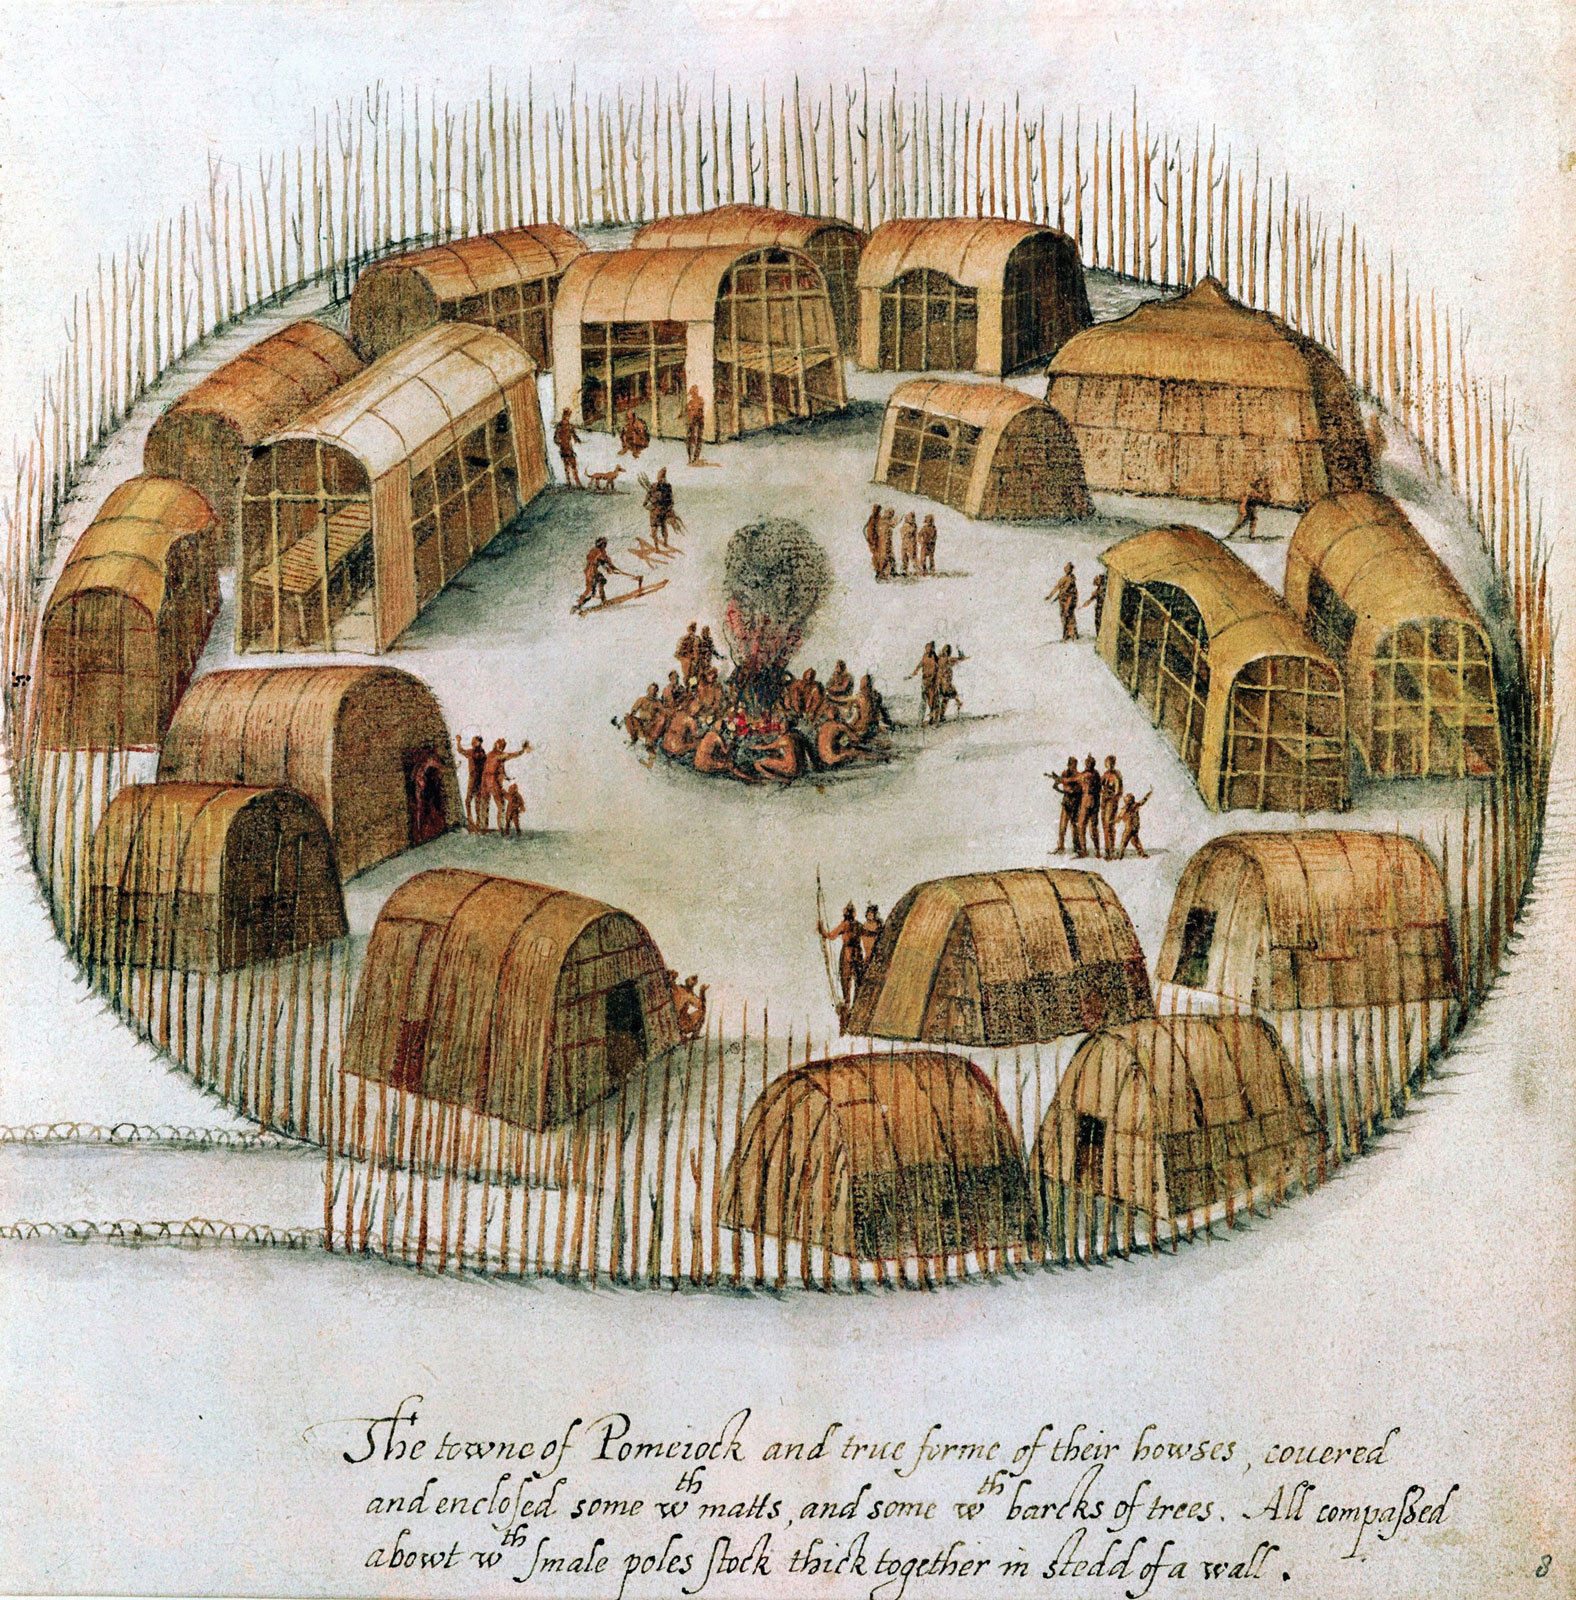 A 16th-century sketch of the Algonquian village of Pomeiock.